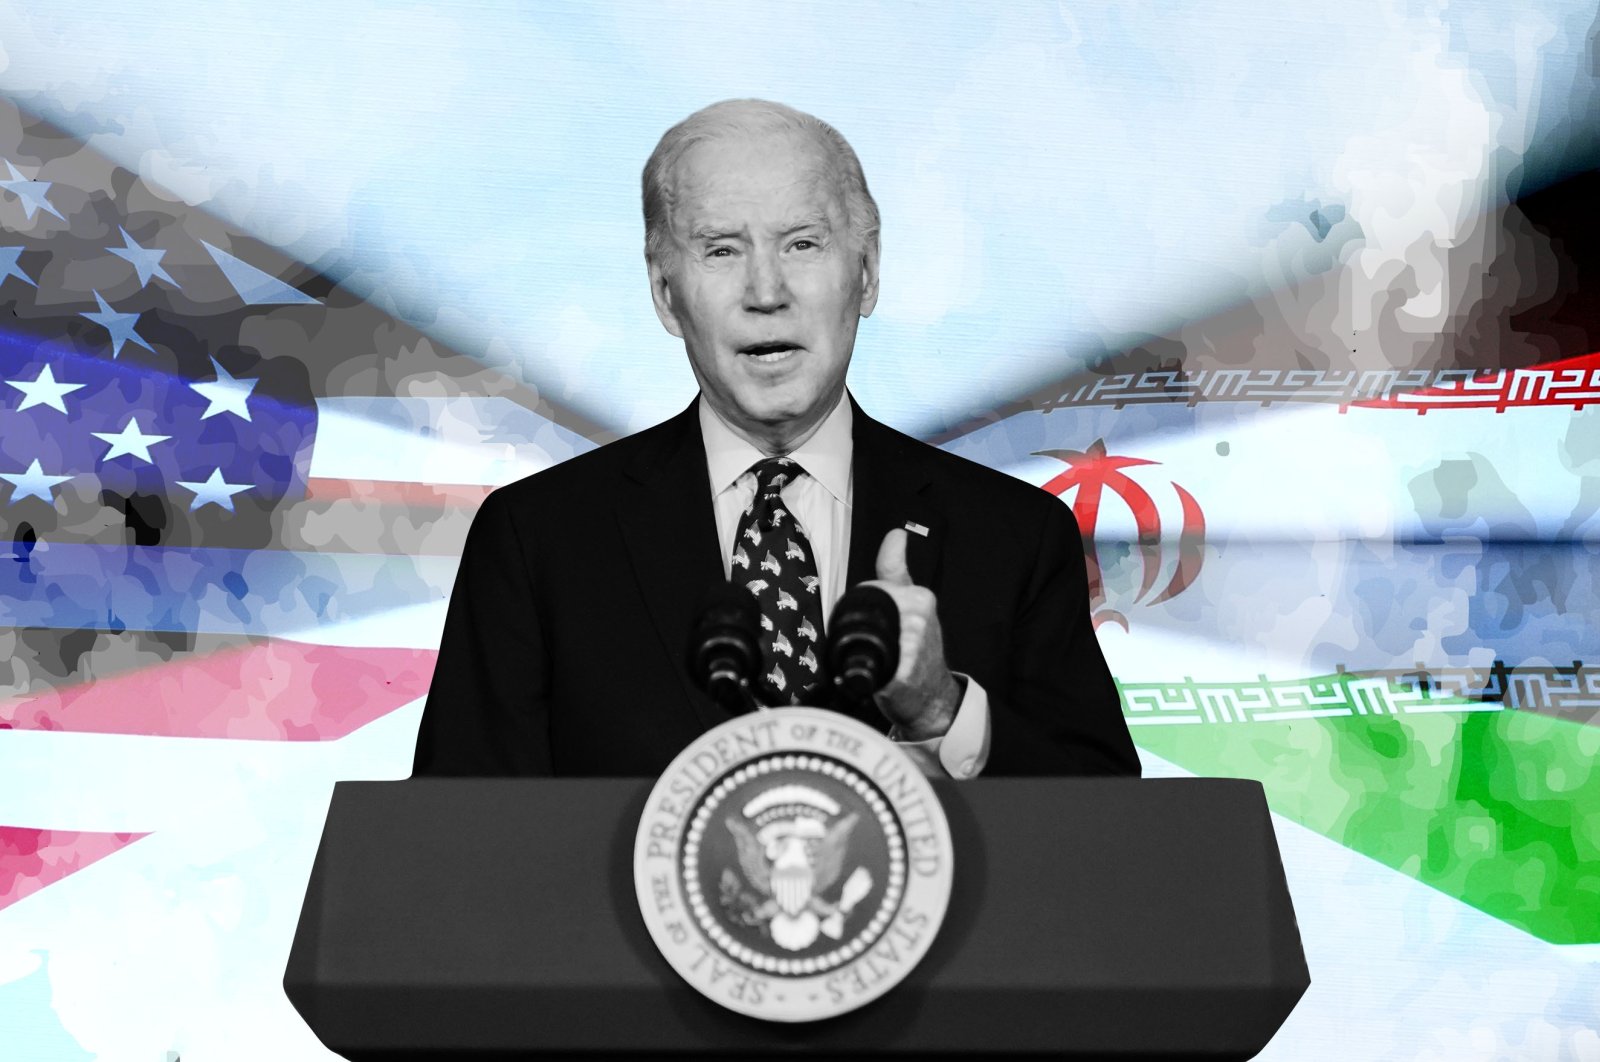 Illustration of U.S. President Joe Biden with the national flags of the U.S. and Iran seen in the background. (Illustration by Büşra Öztürk)